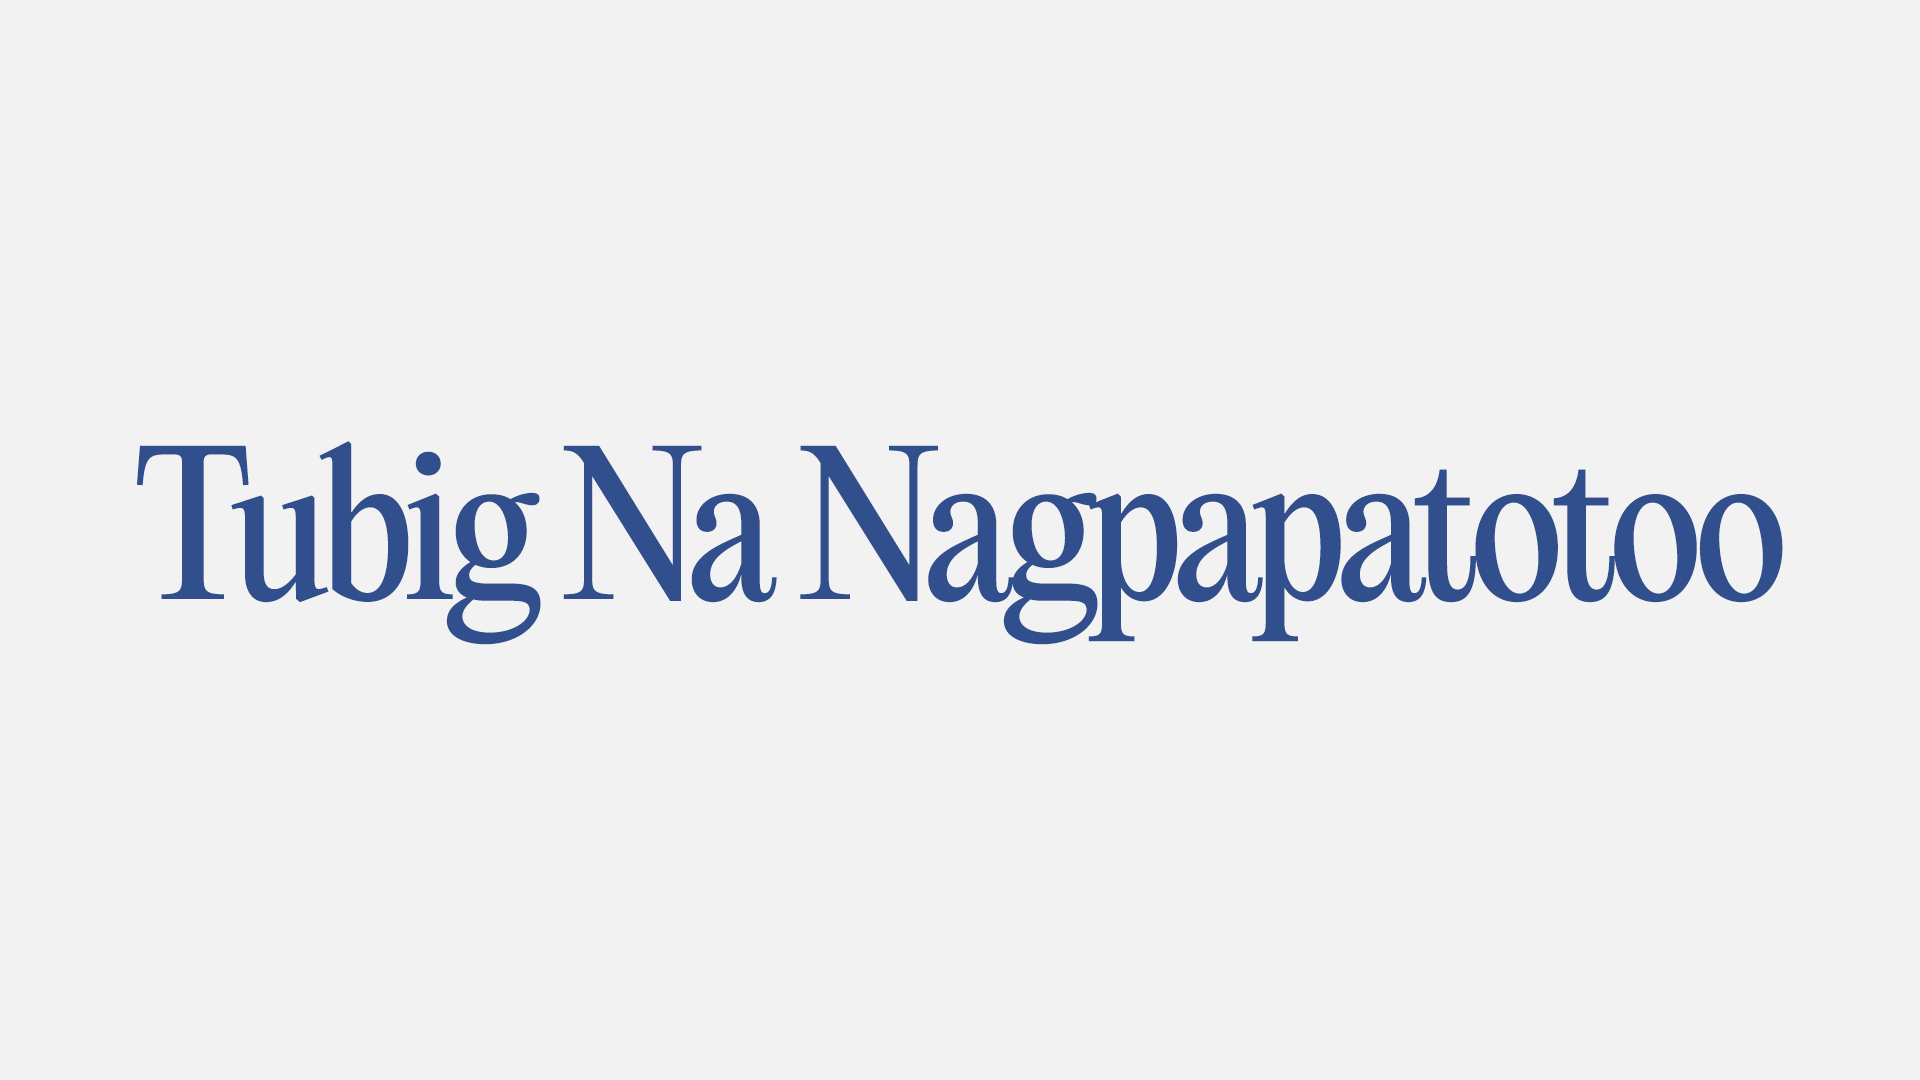 Ang Tubig na Nagpapatotoo